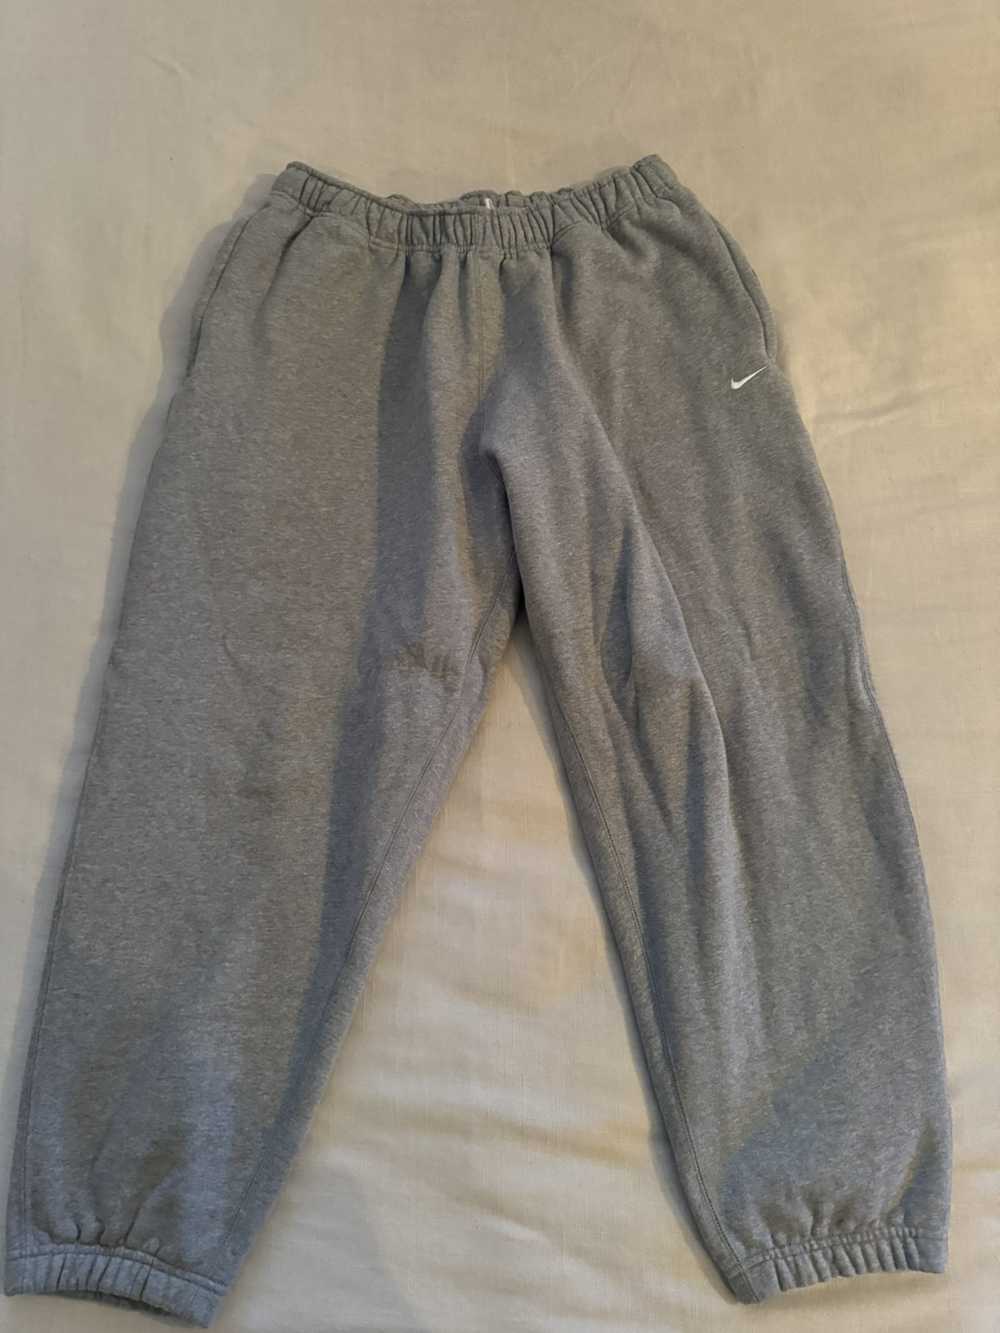 Vintage grey nike sweatpants - Gem